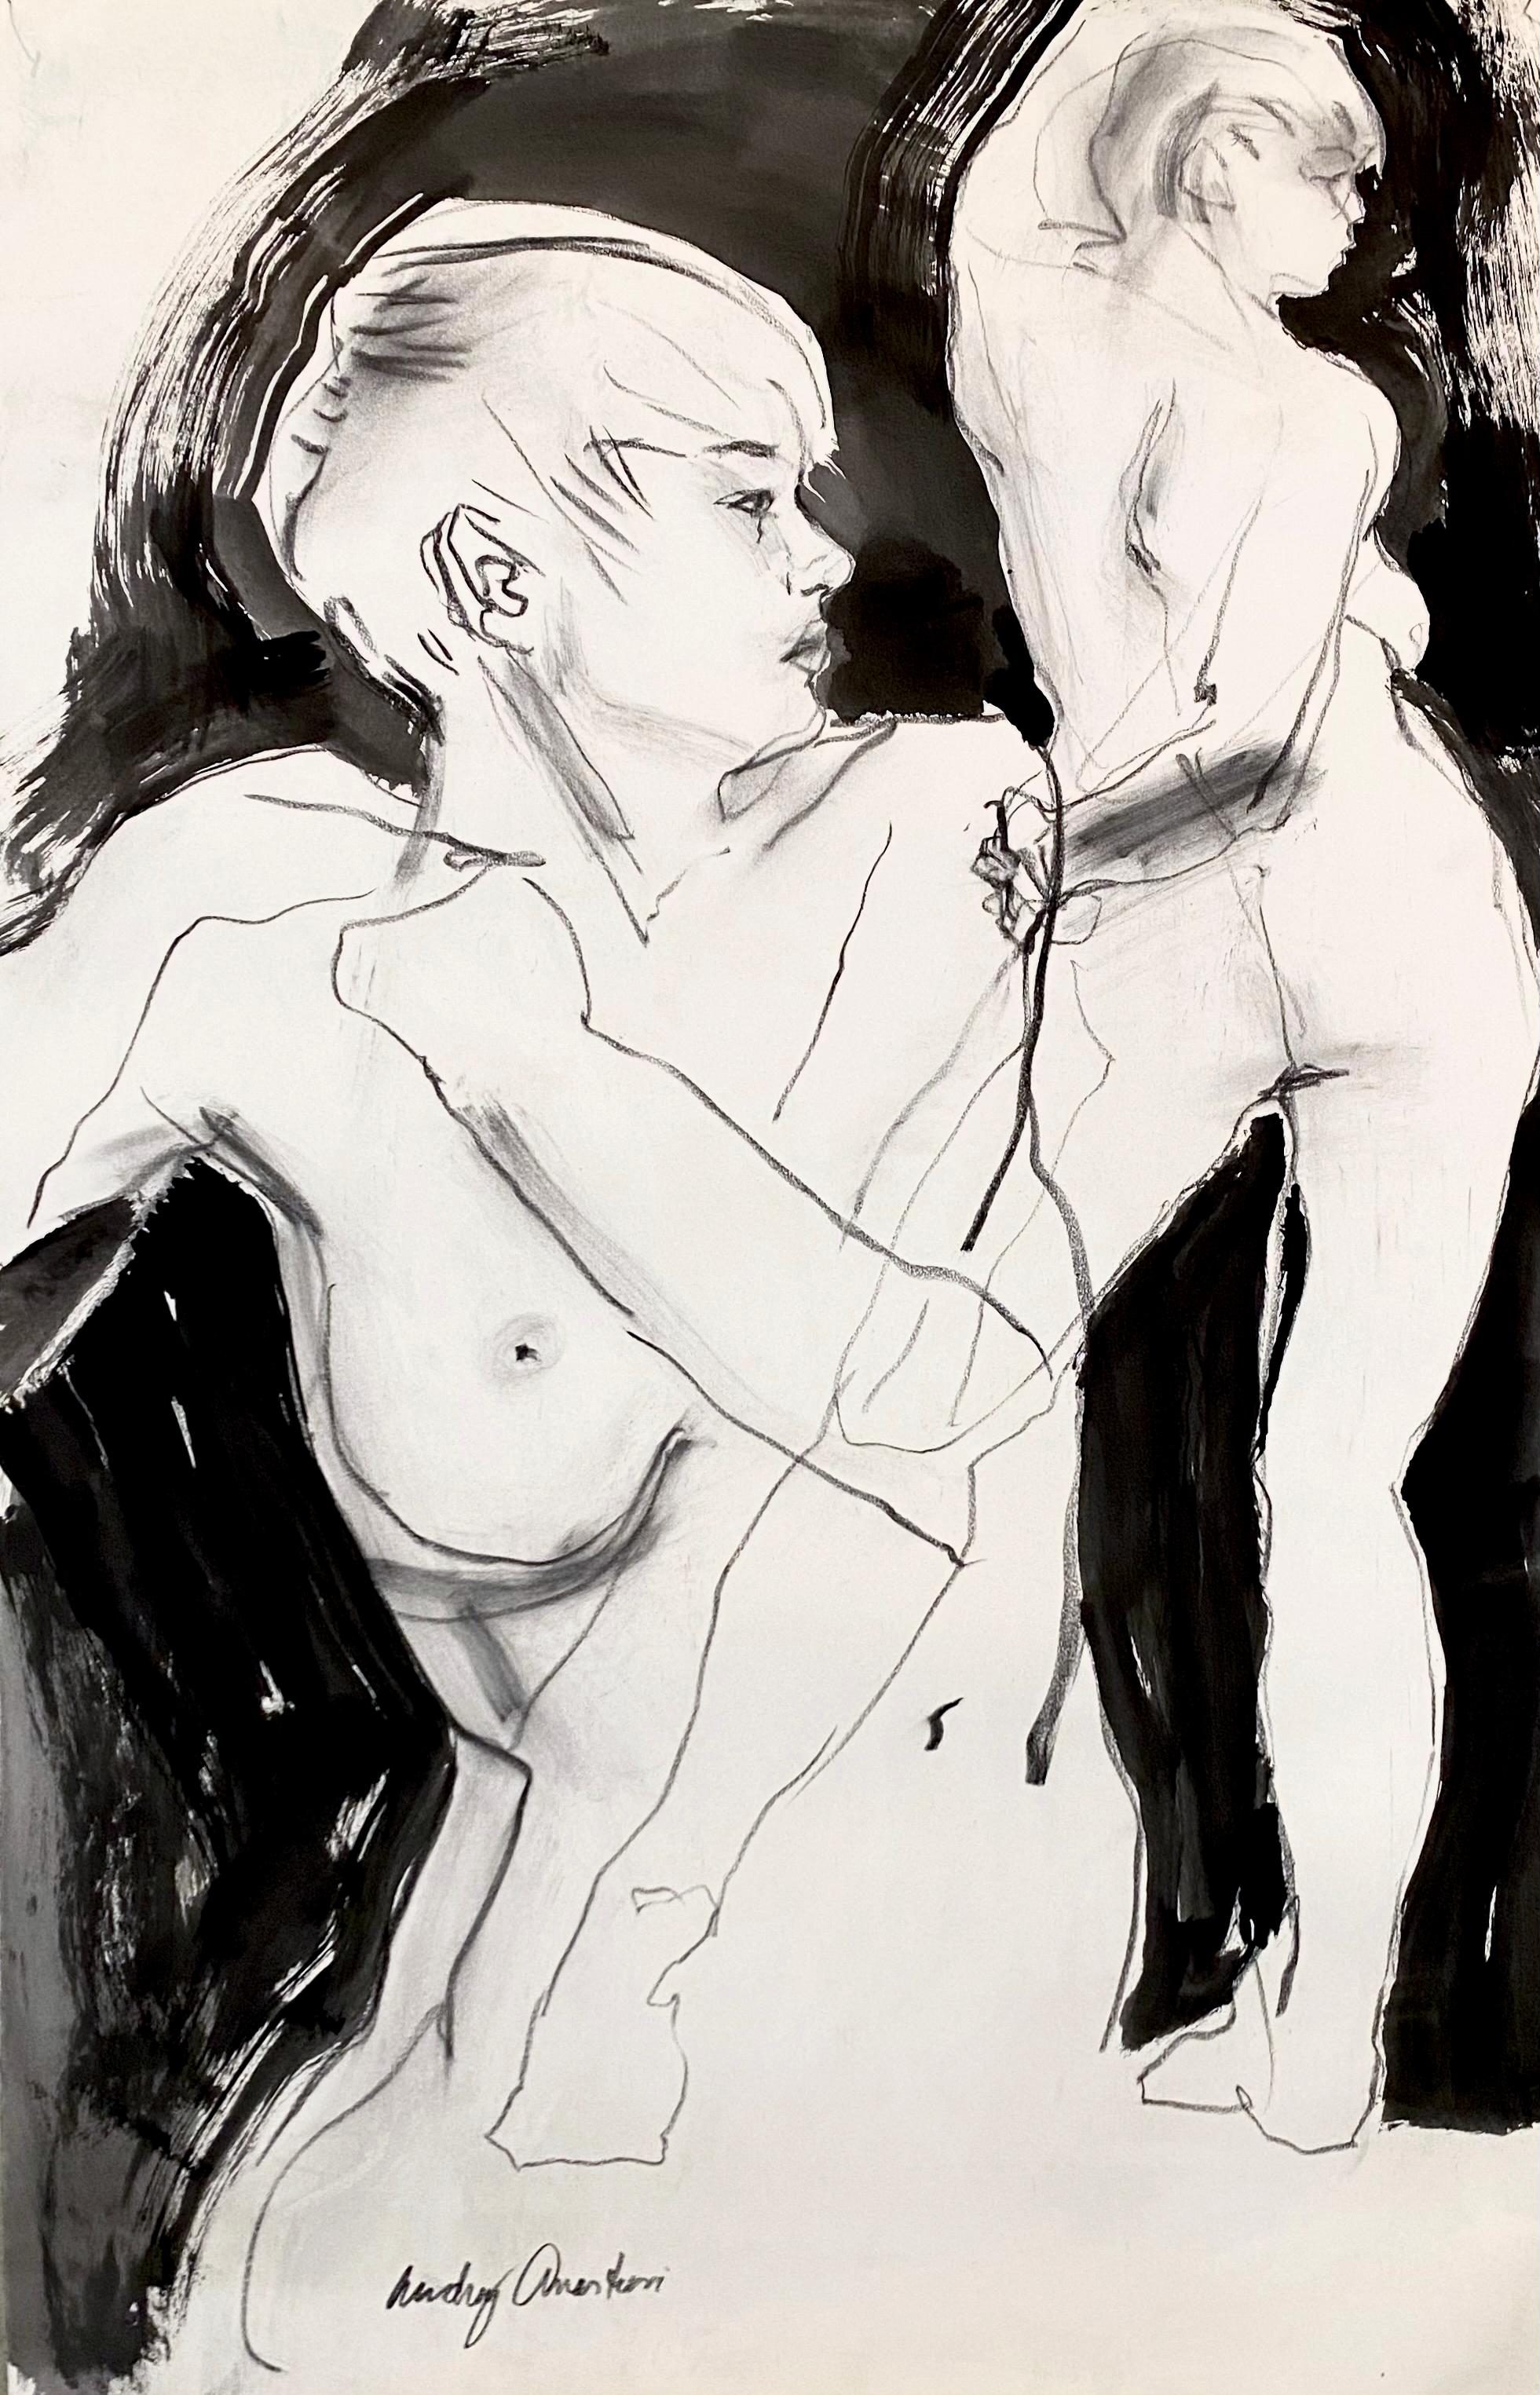 Audrey Anastasi Figurative Art - Twice Dancer, monochromatic, black and white figurative, sketch quality